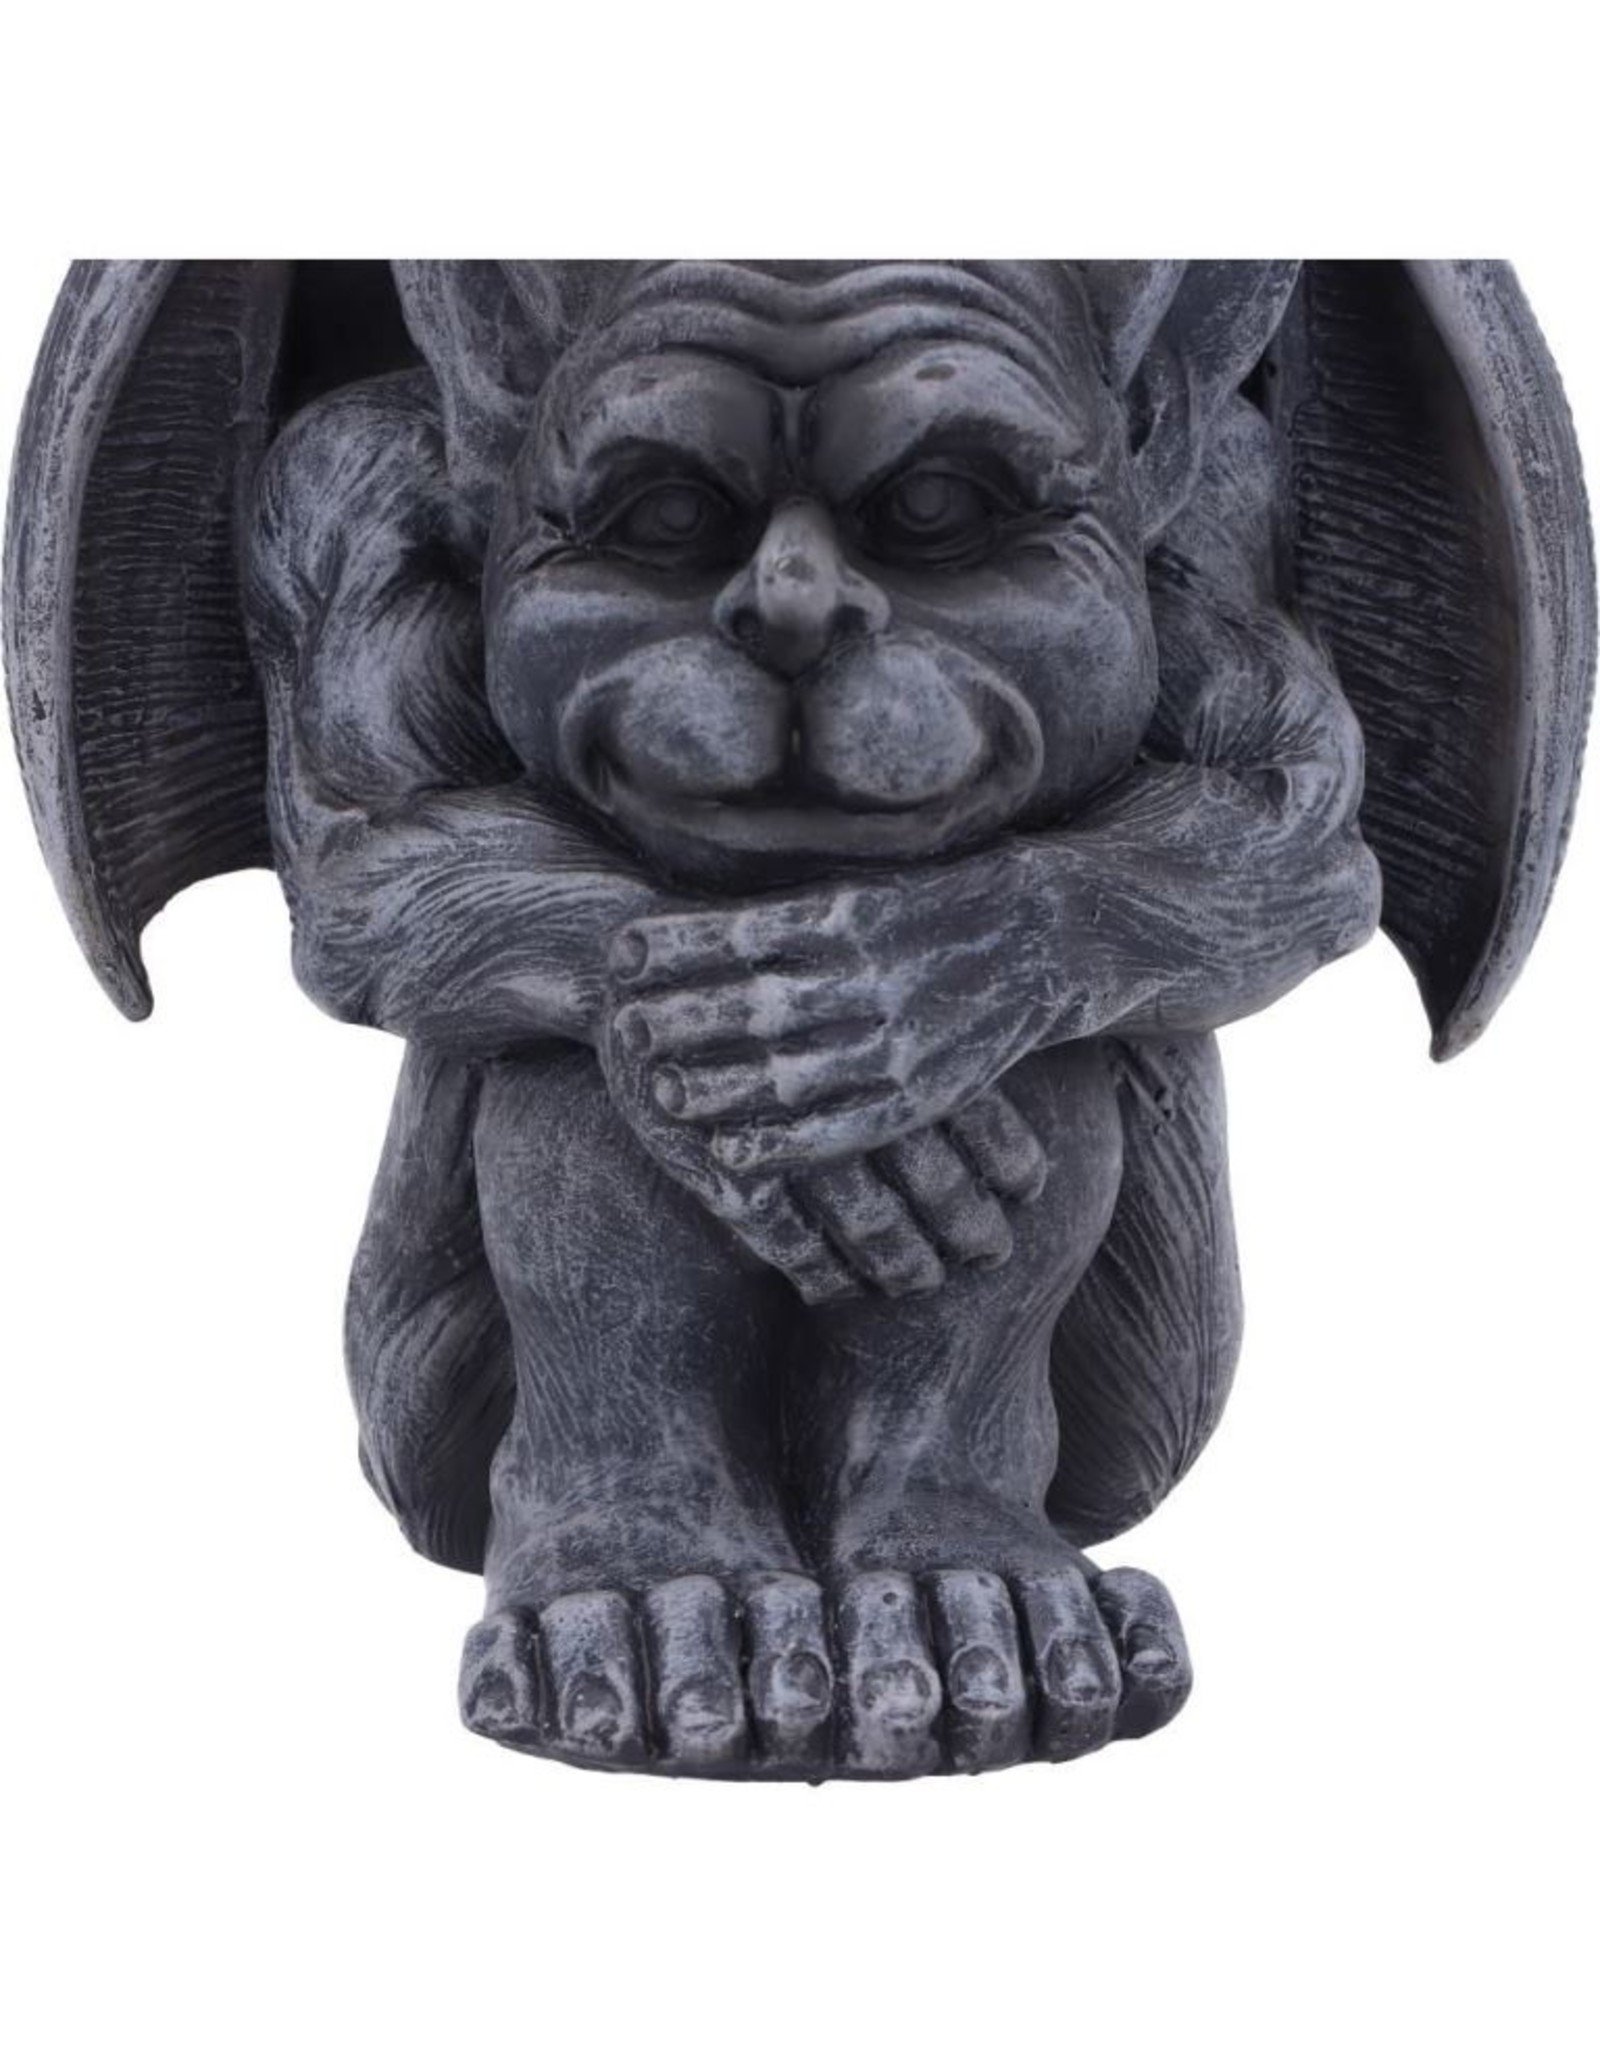 NemesisNow Giftware Figurines Collectables - Quasi Dark Grotesque Gargoyle Figurine 12.5cm